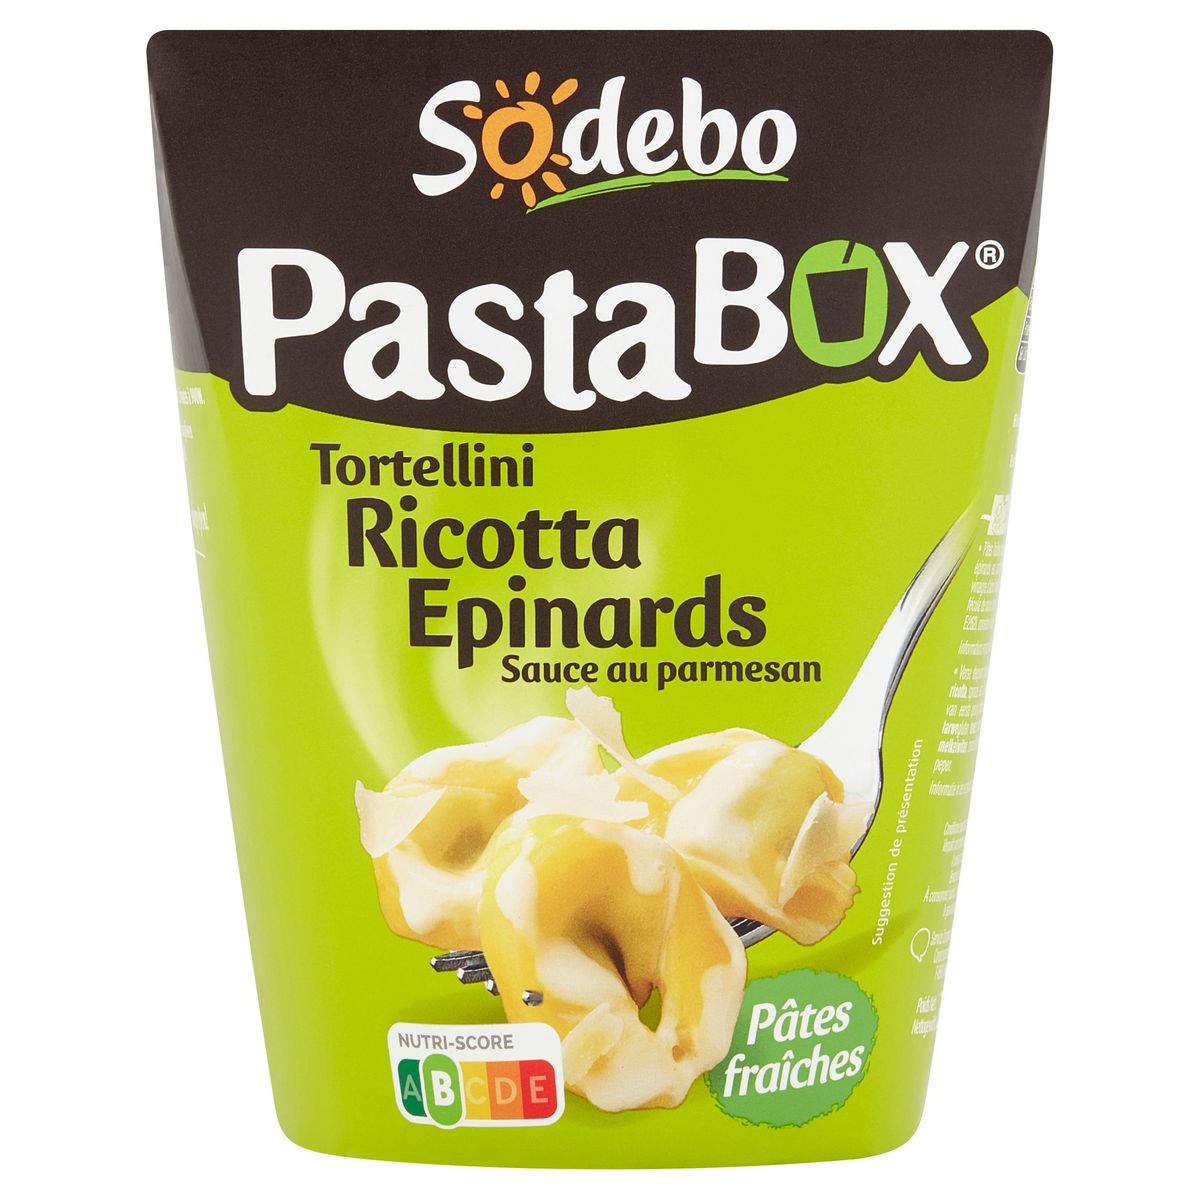 Sodebo Pasta Box Tortellini Ricotta Épinards Sauce au Parmesan 280 g